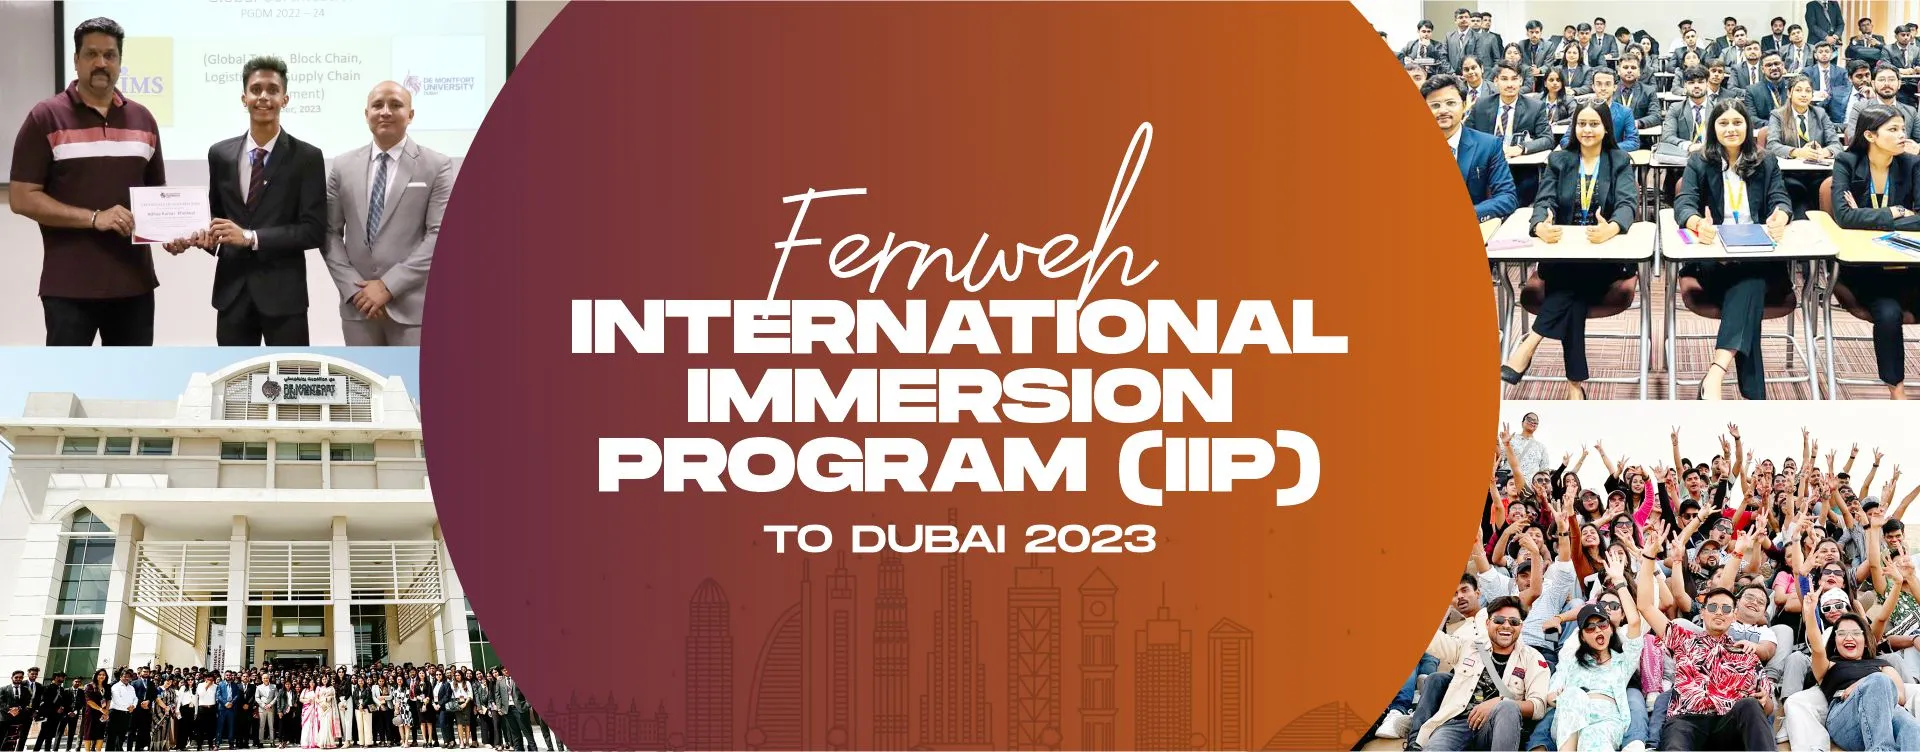 International Immersion Program